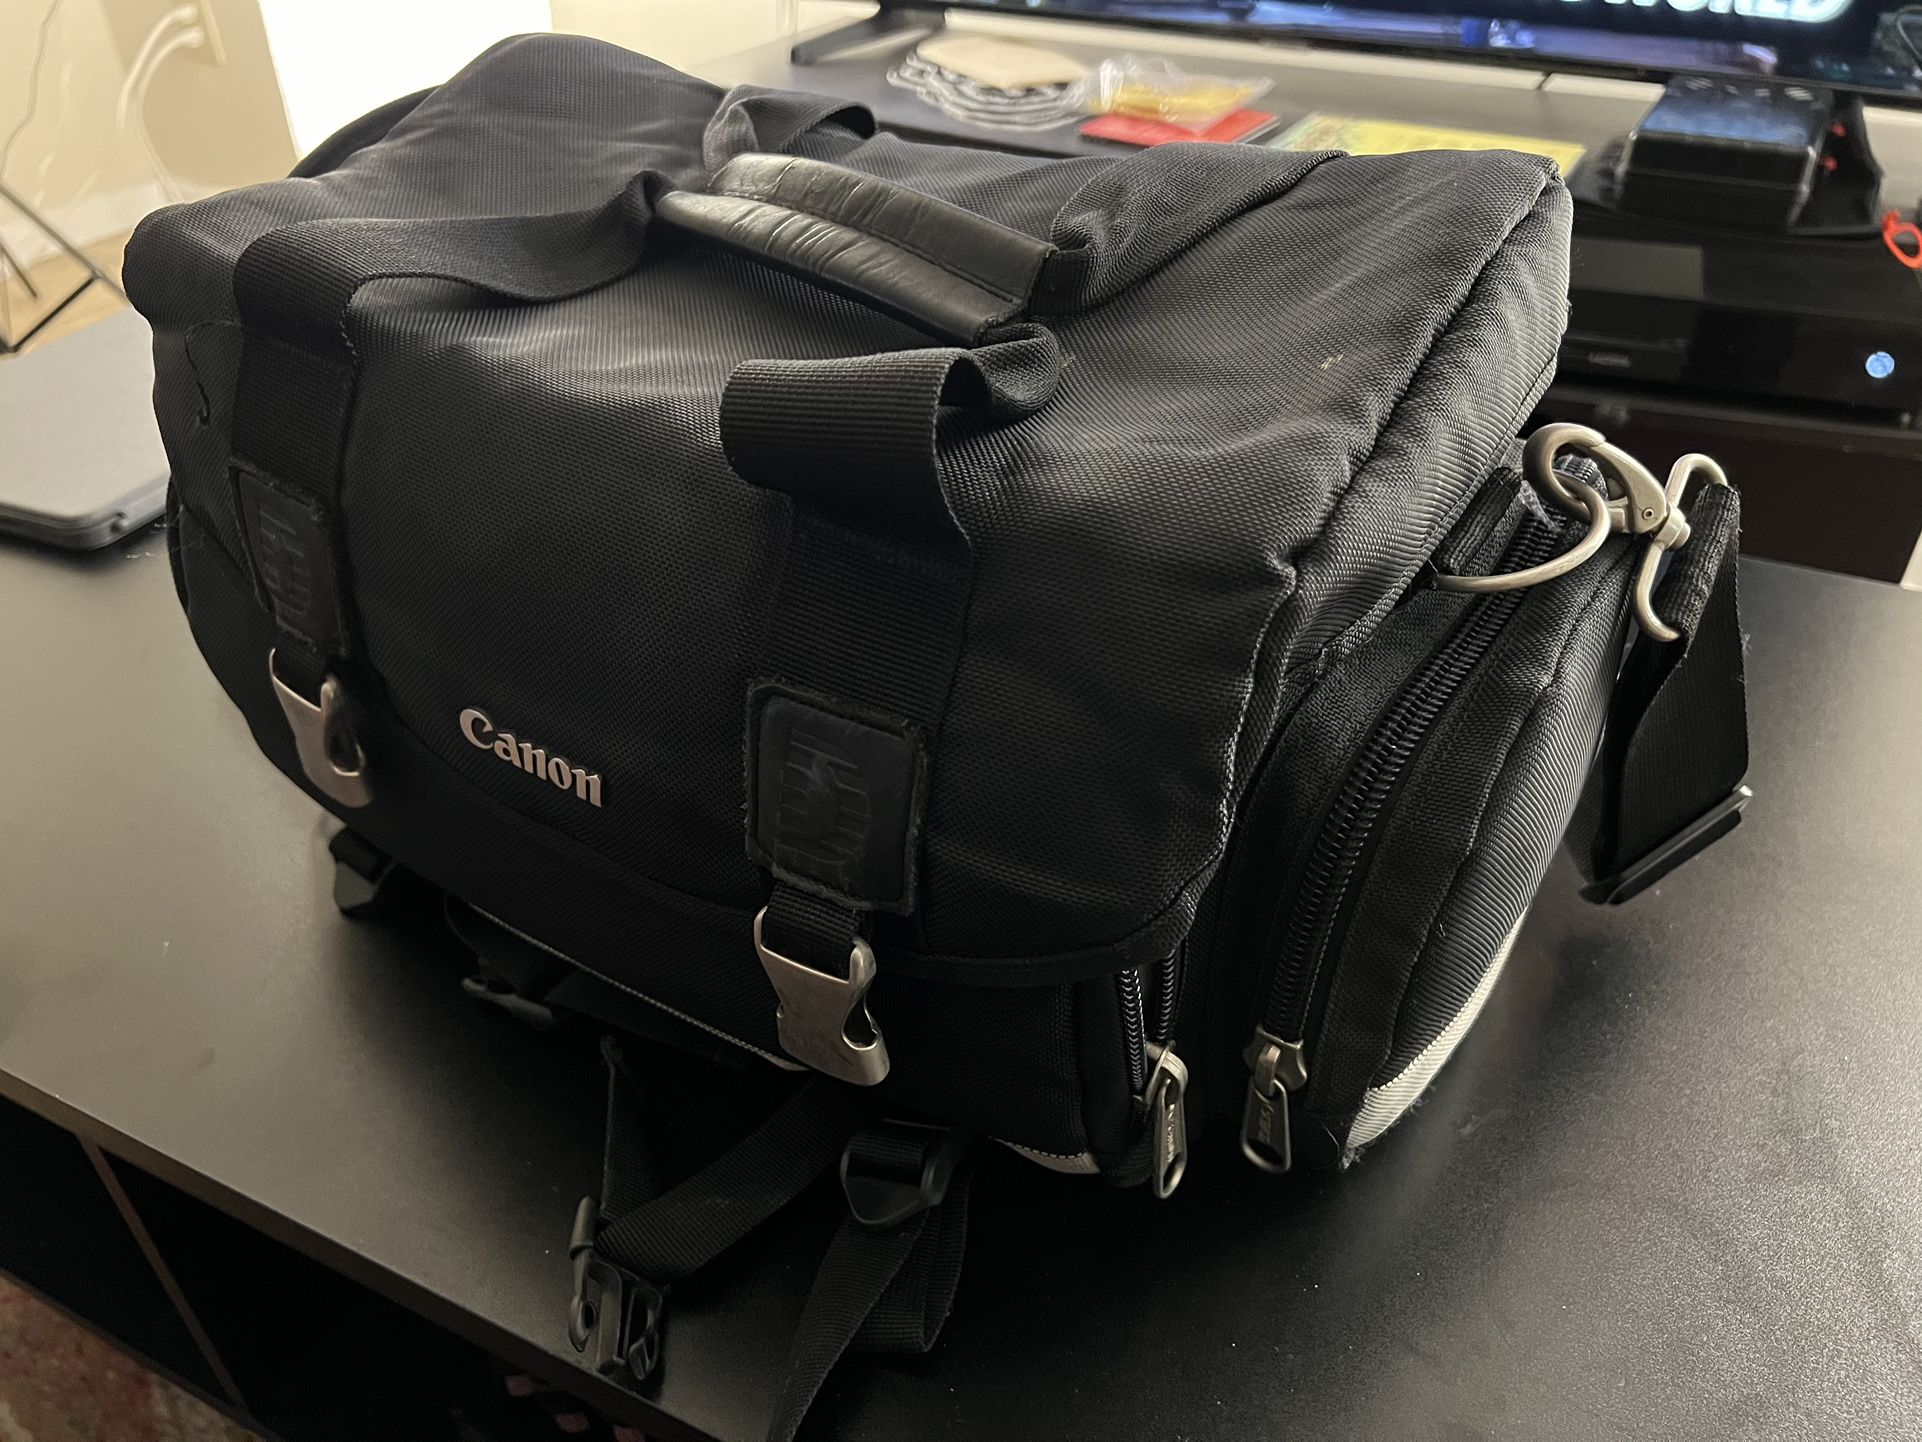 Canon 200DG Camera Bag